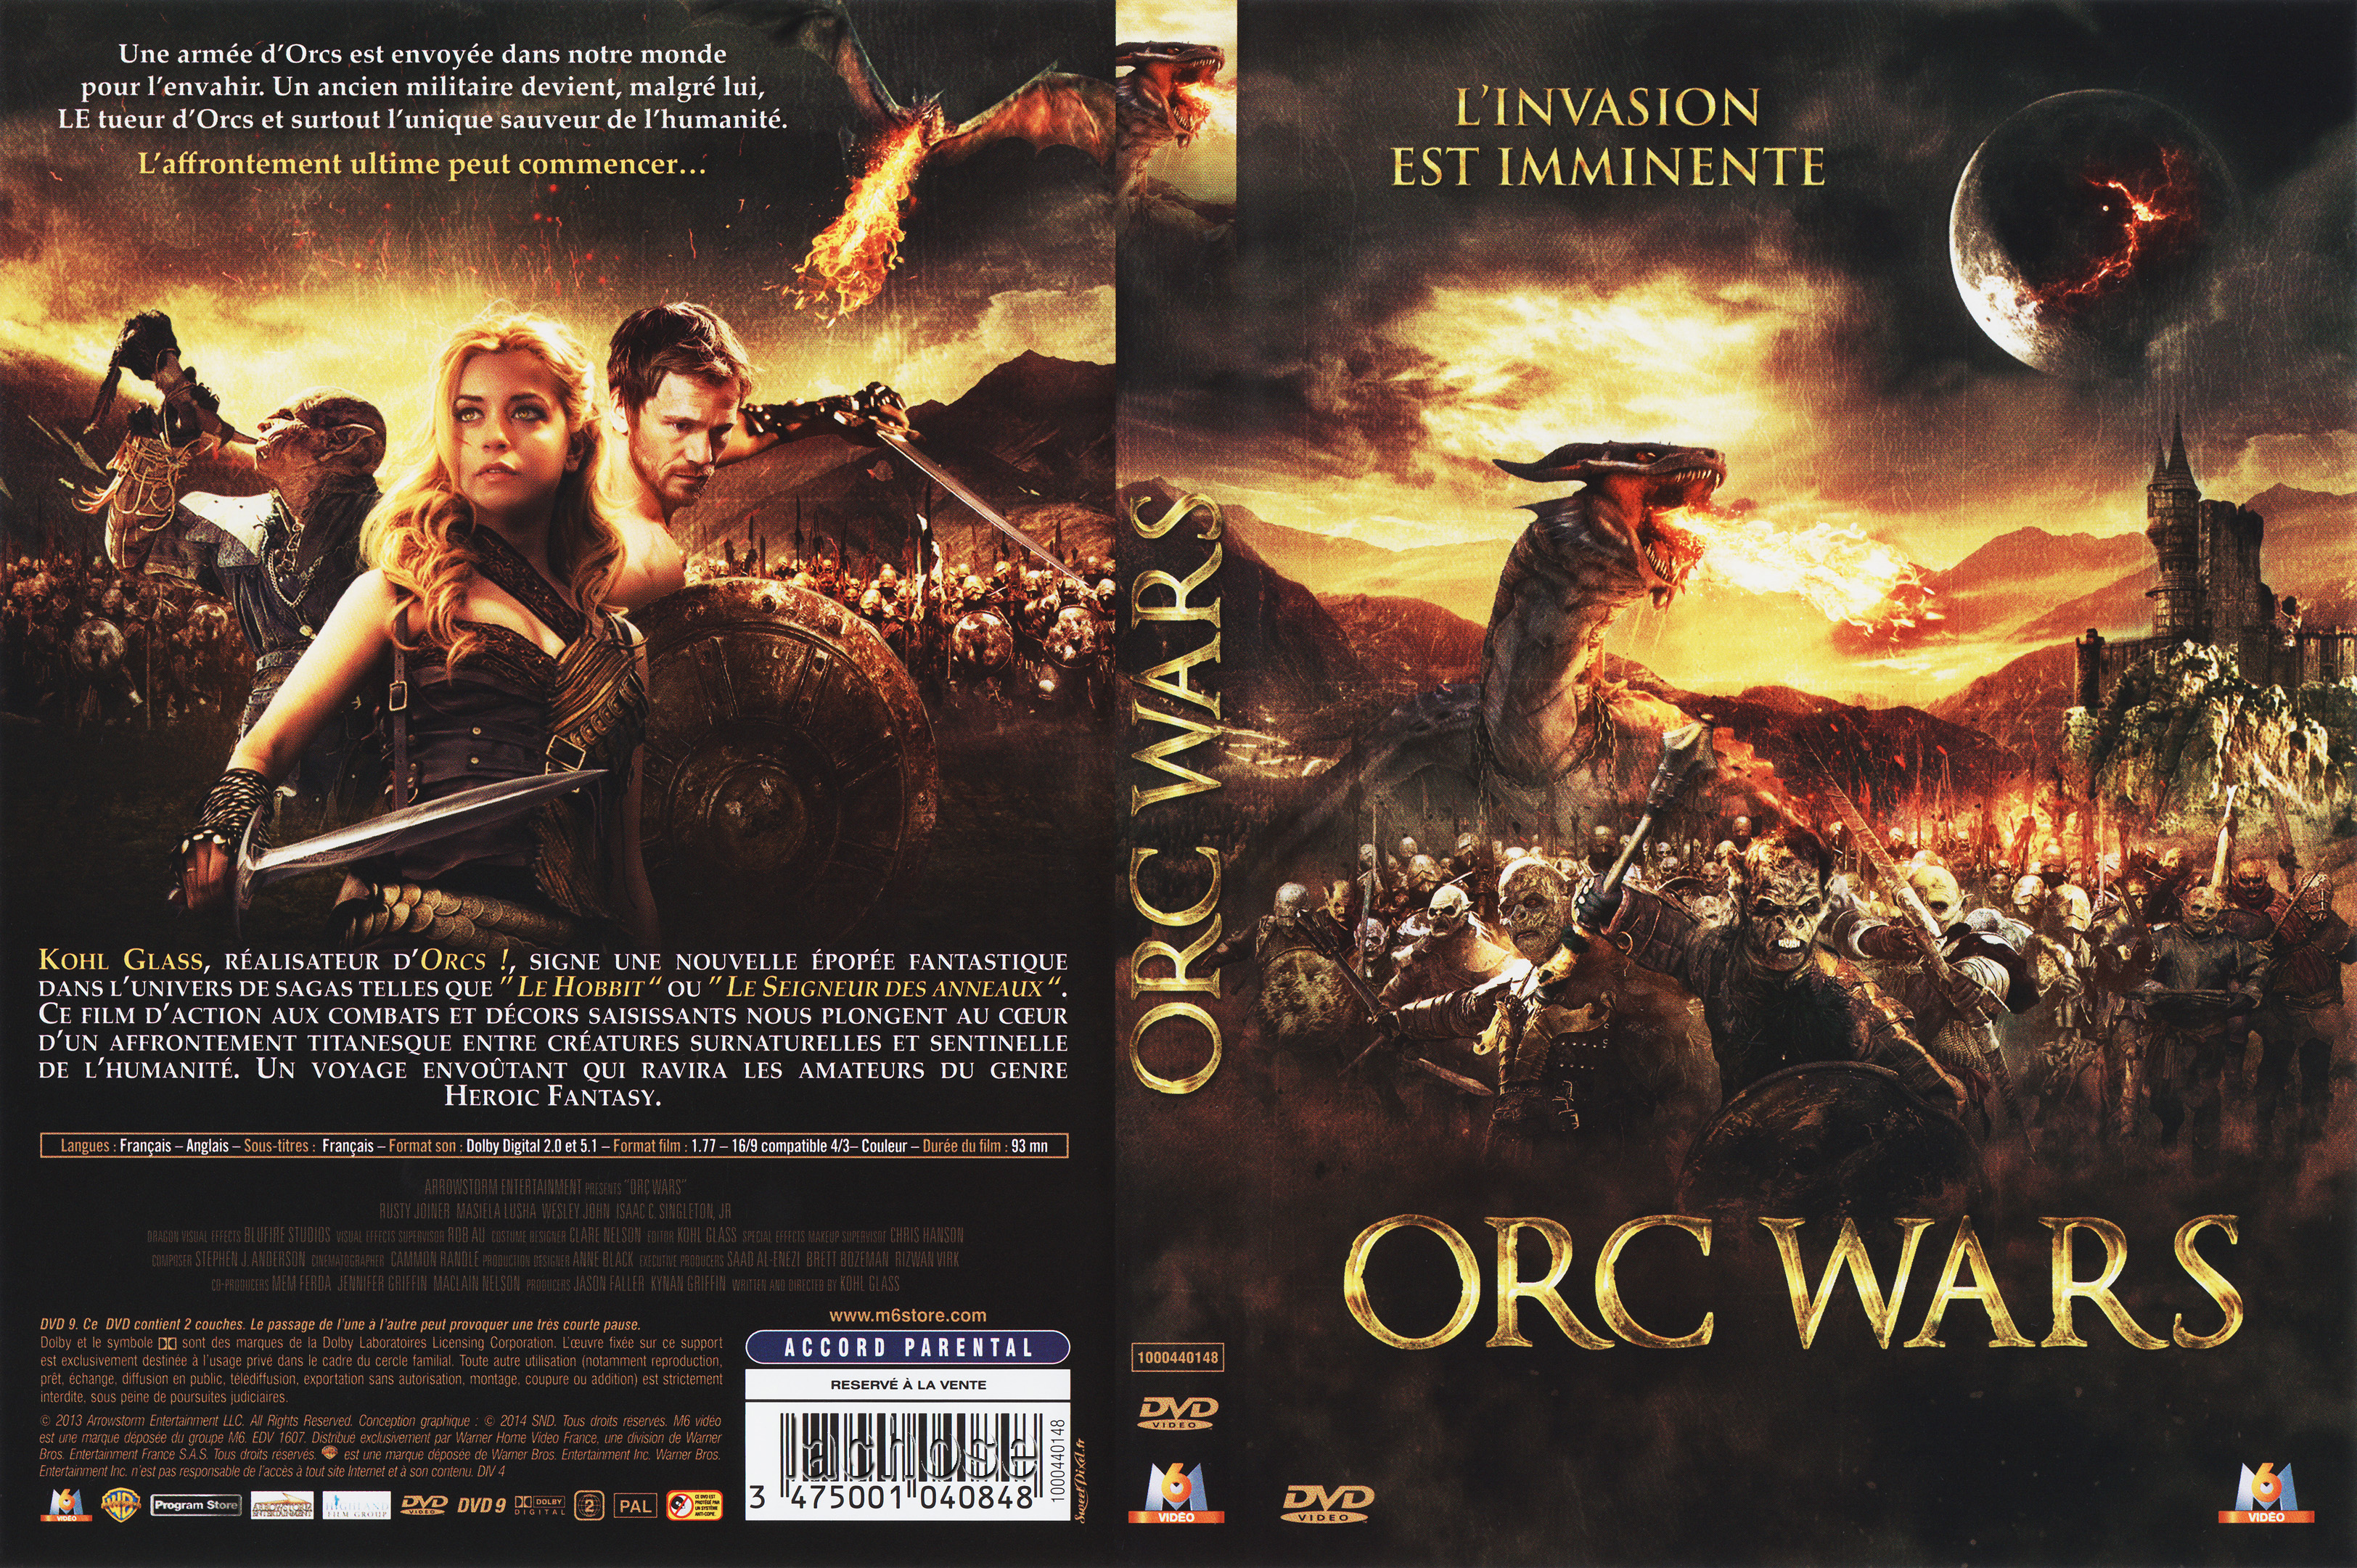 Jaquette DVD Orc wars